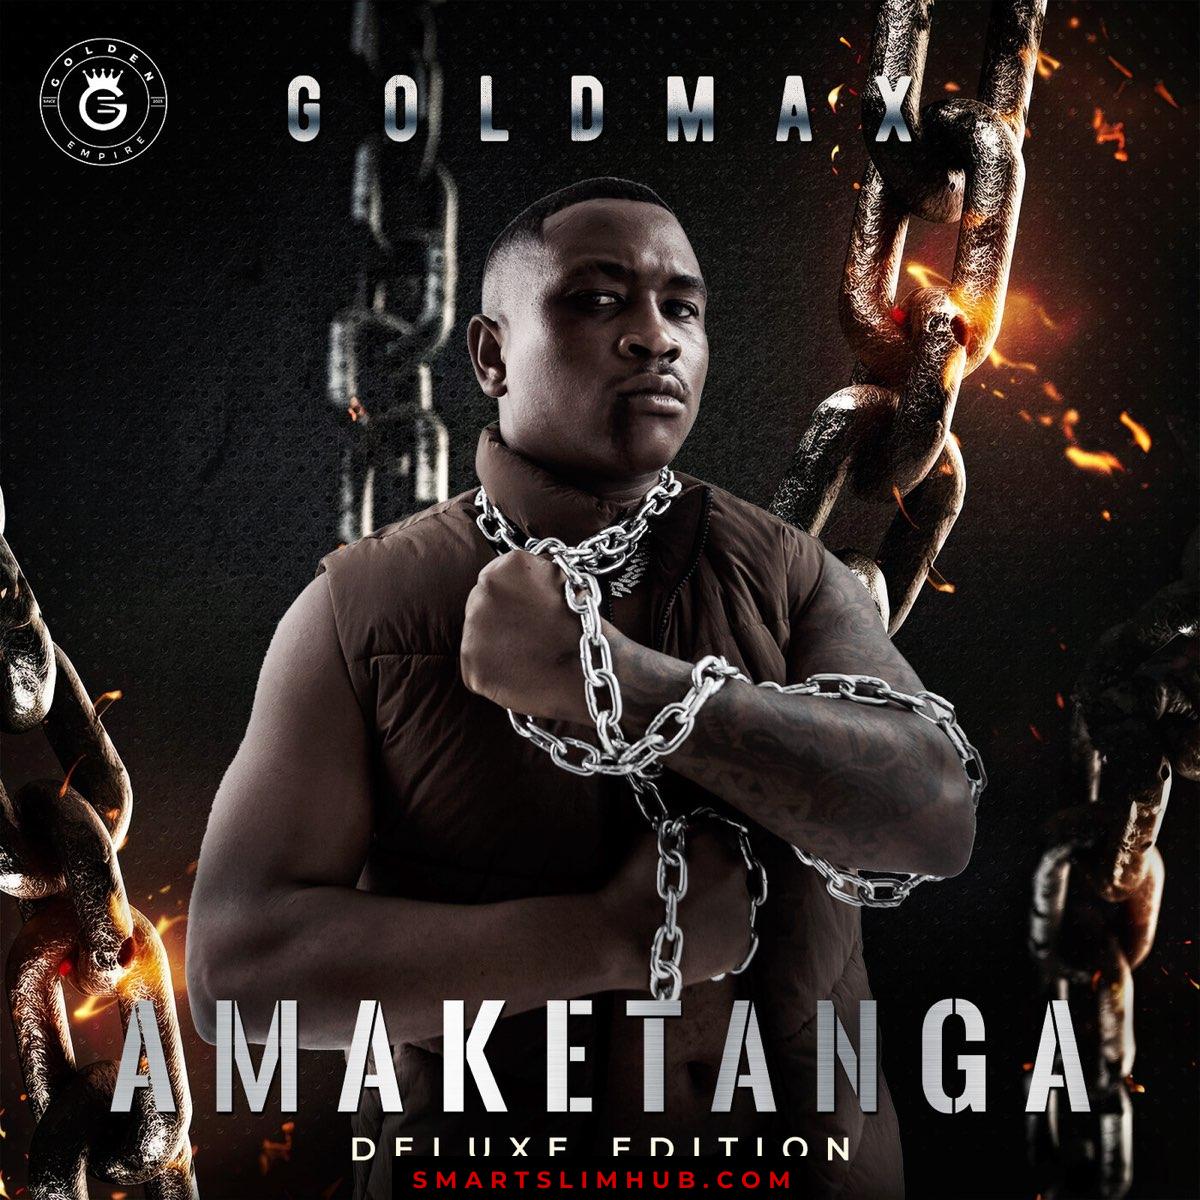 Goldmax – Amaketanga (Deluxe Edition) Album